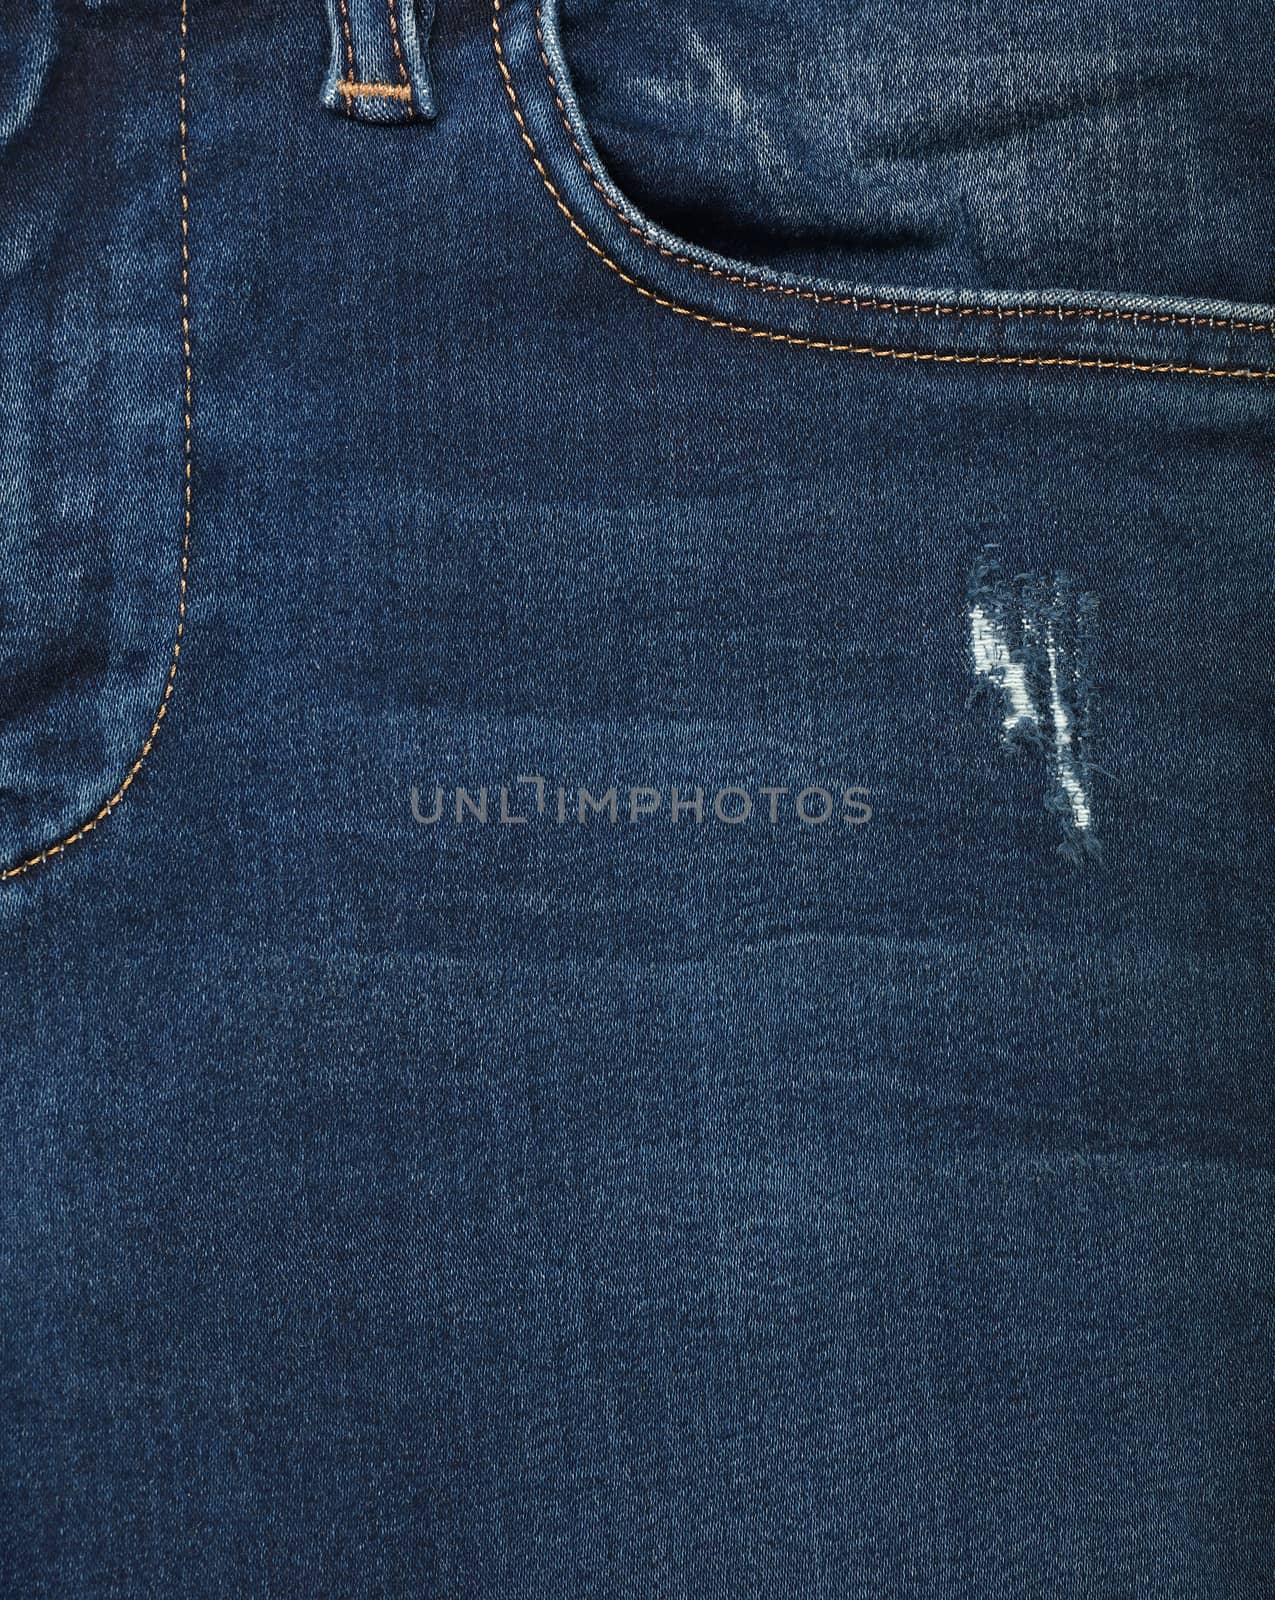 Dark indigo blue washed cotton jeans denim texture background with front pocket, close up